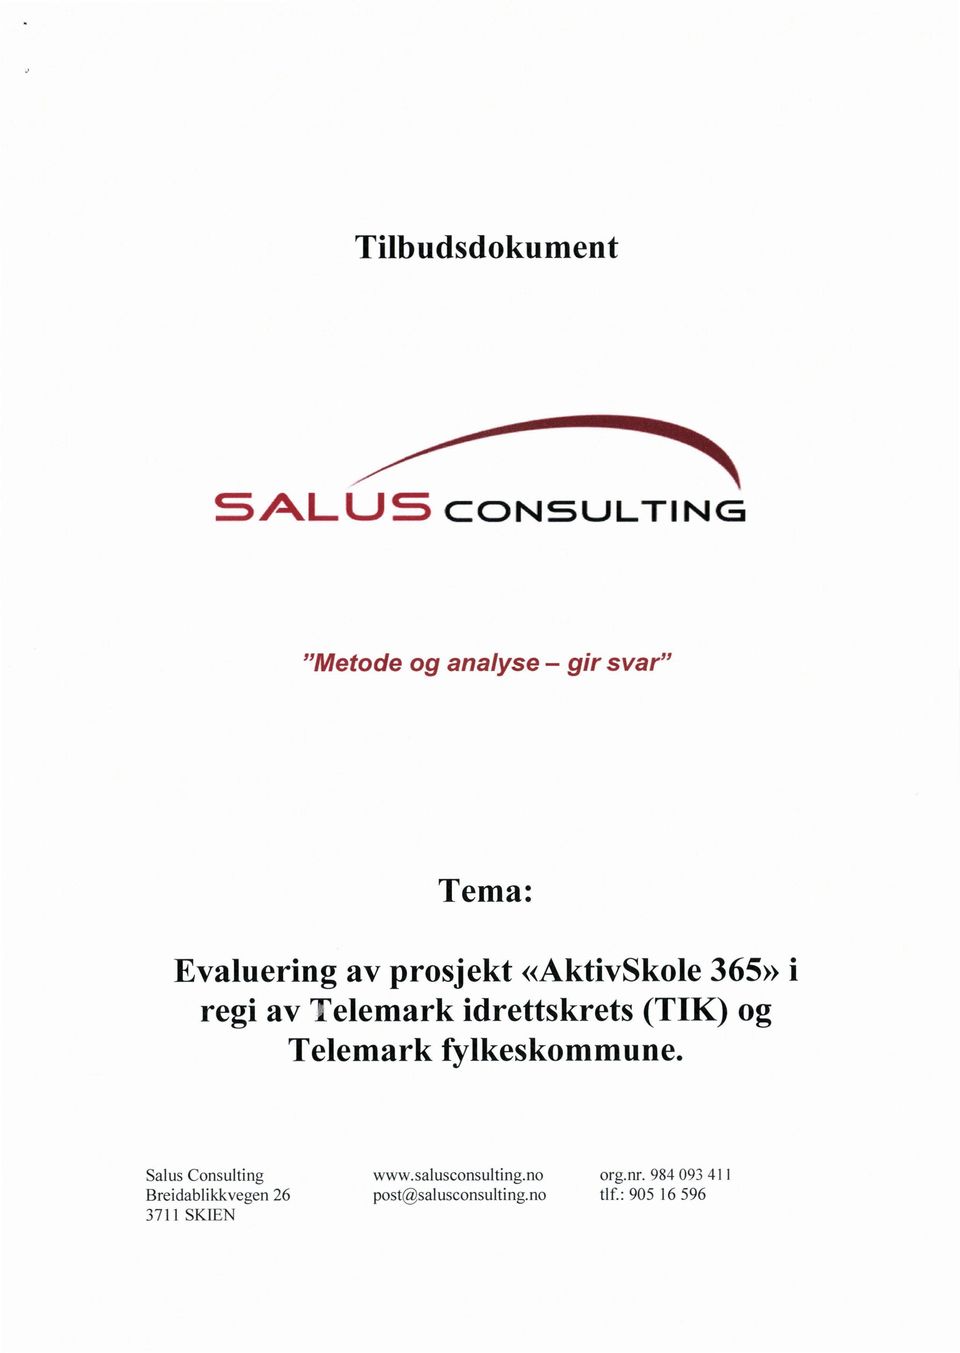 IK) og Telemark fylkeskommune. SalusConsulting www.salusc0nsu1ting.n0 Orgnr.